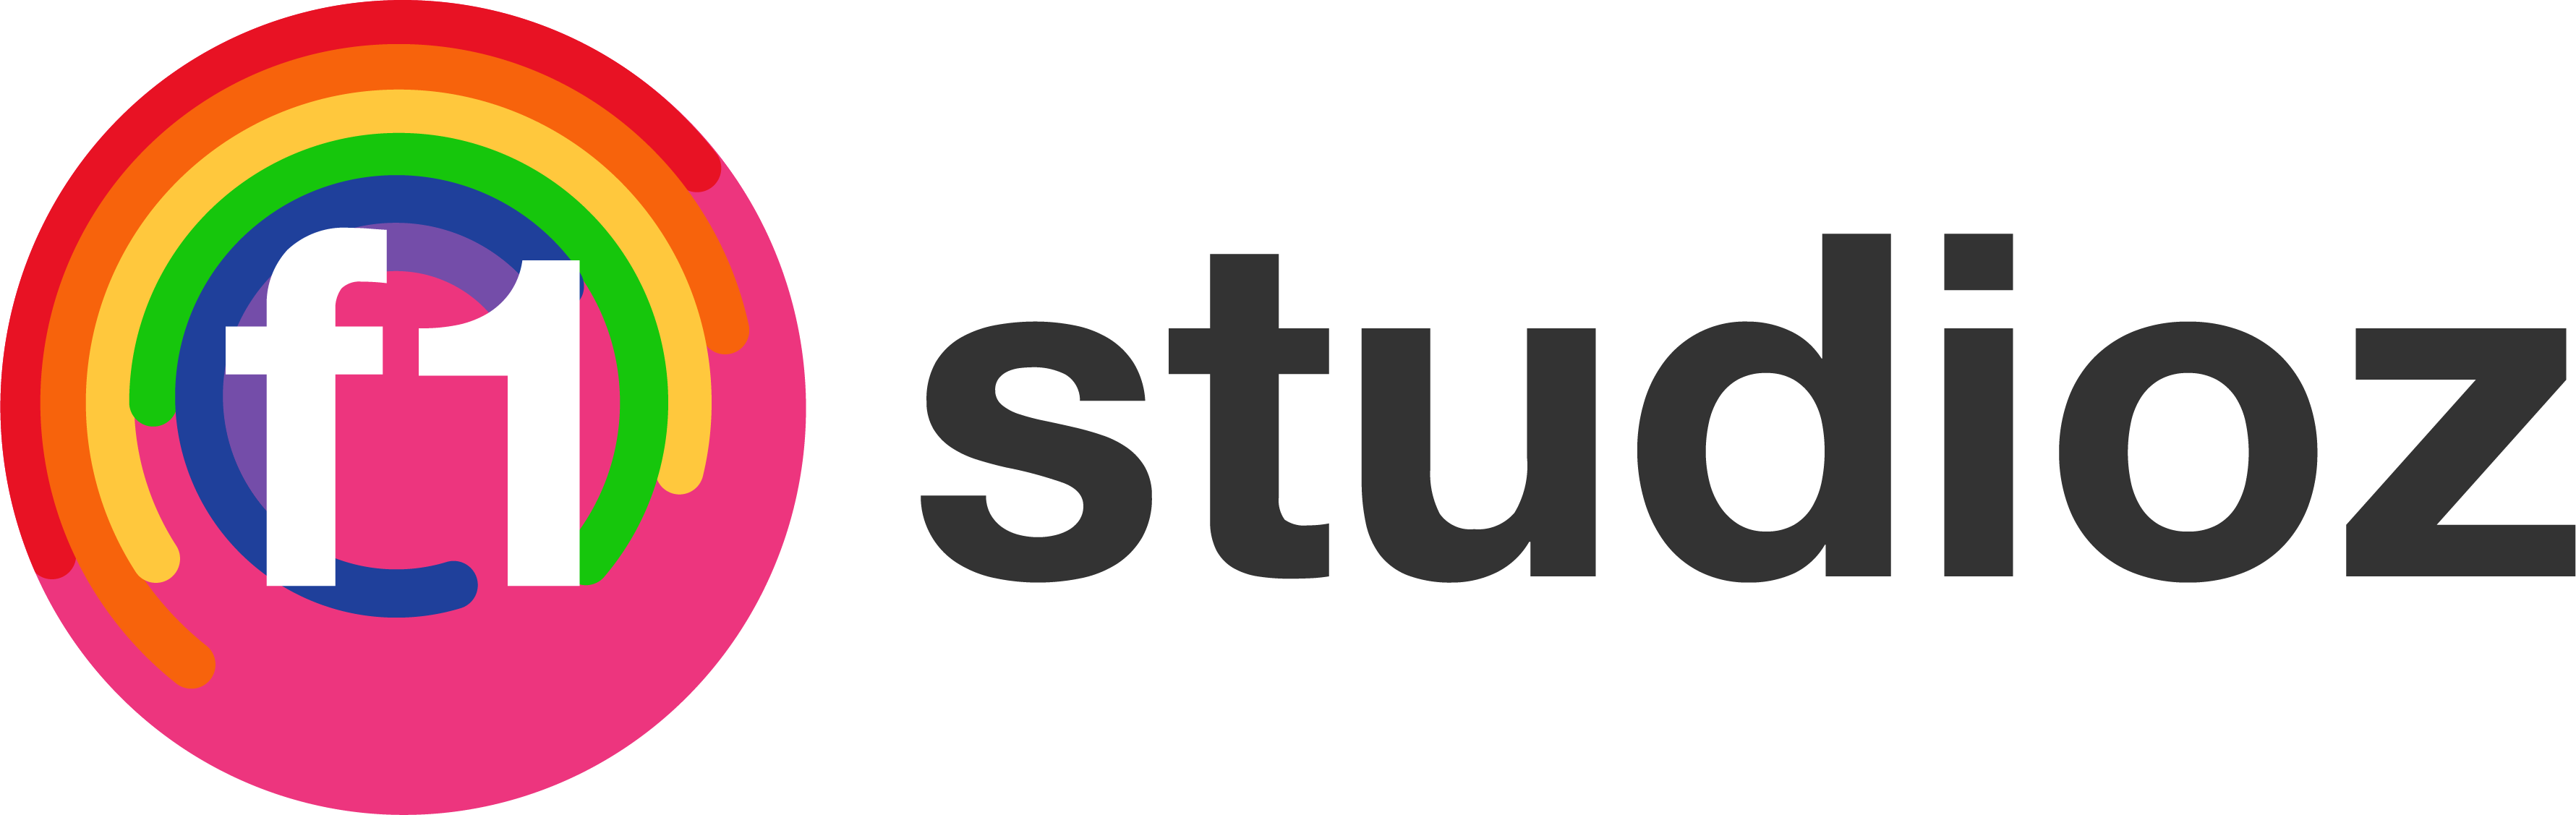 f1Studioz Logo